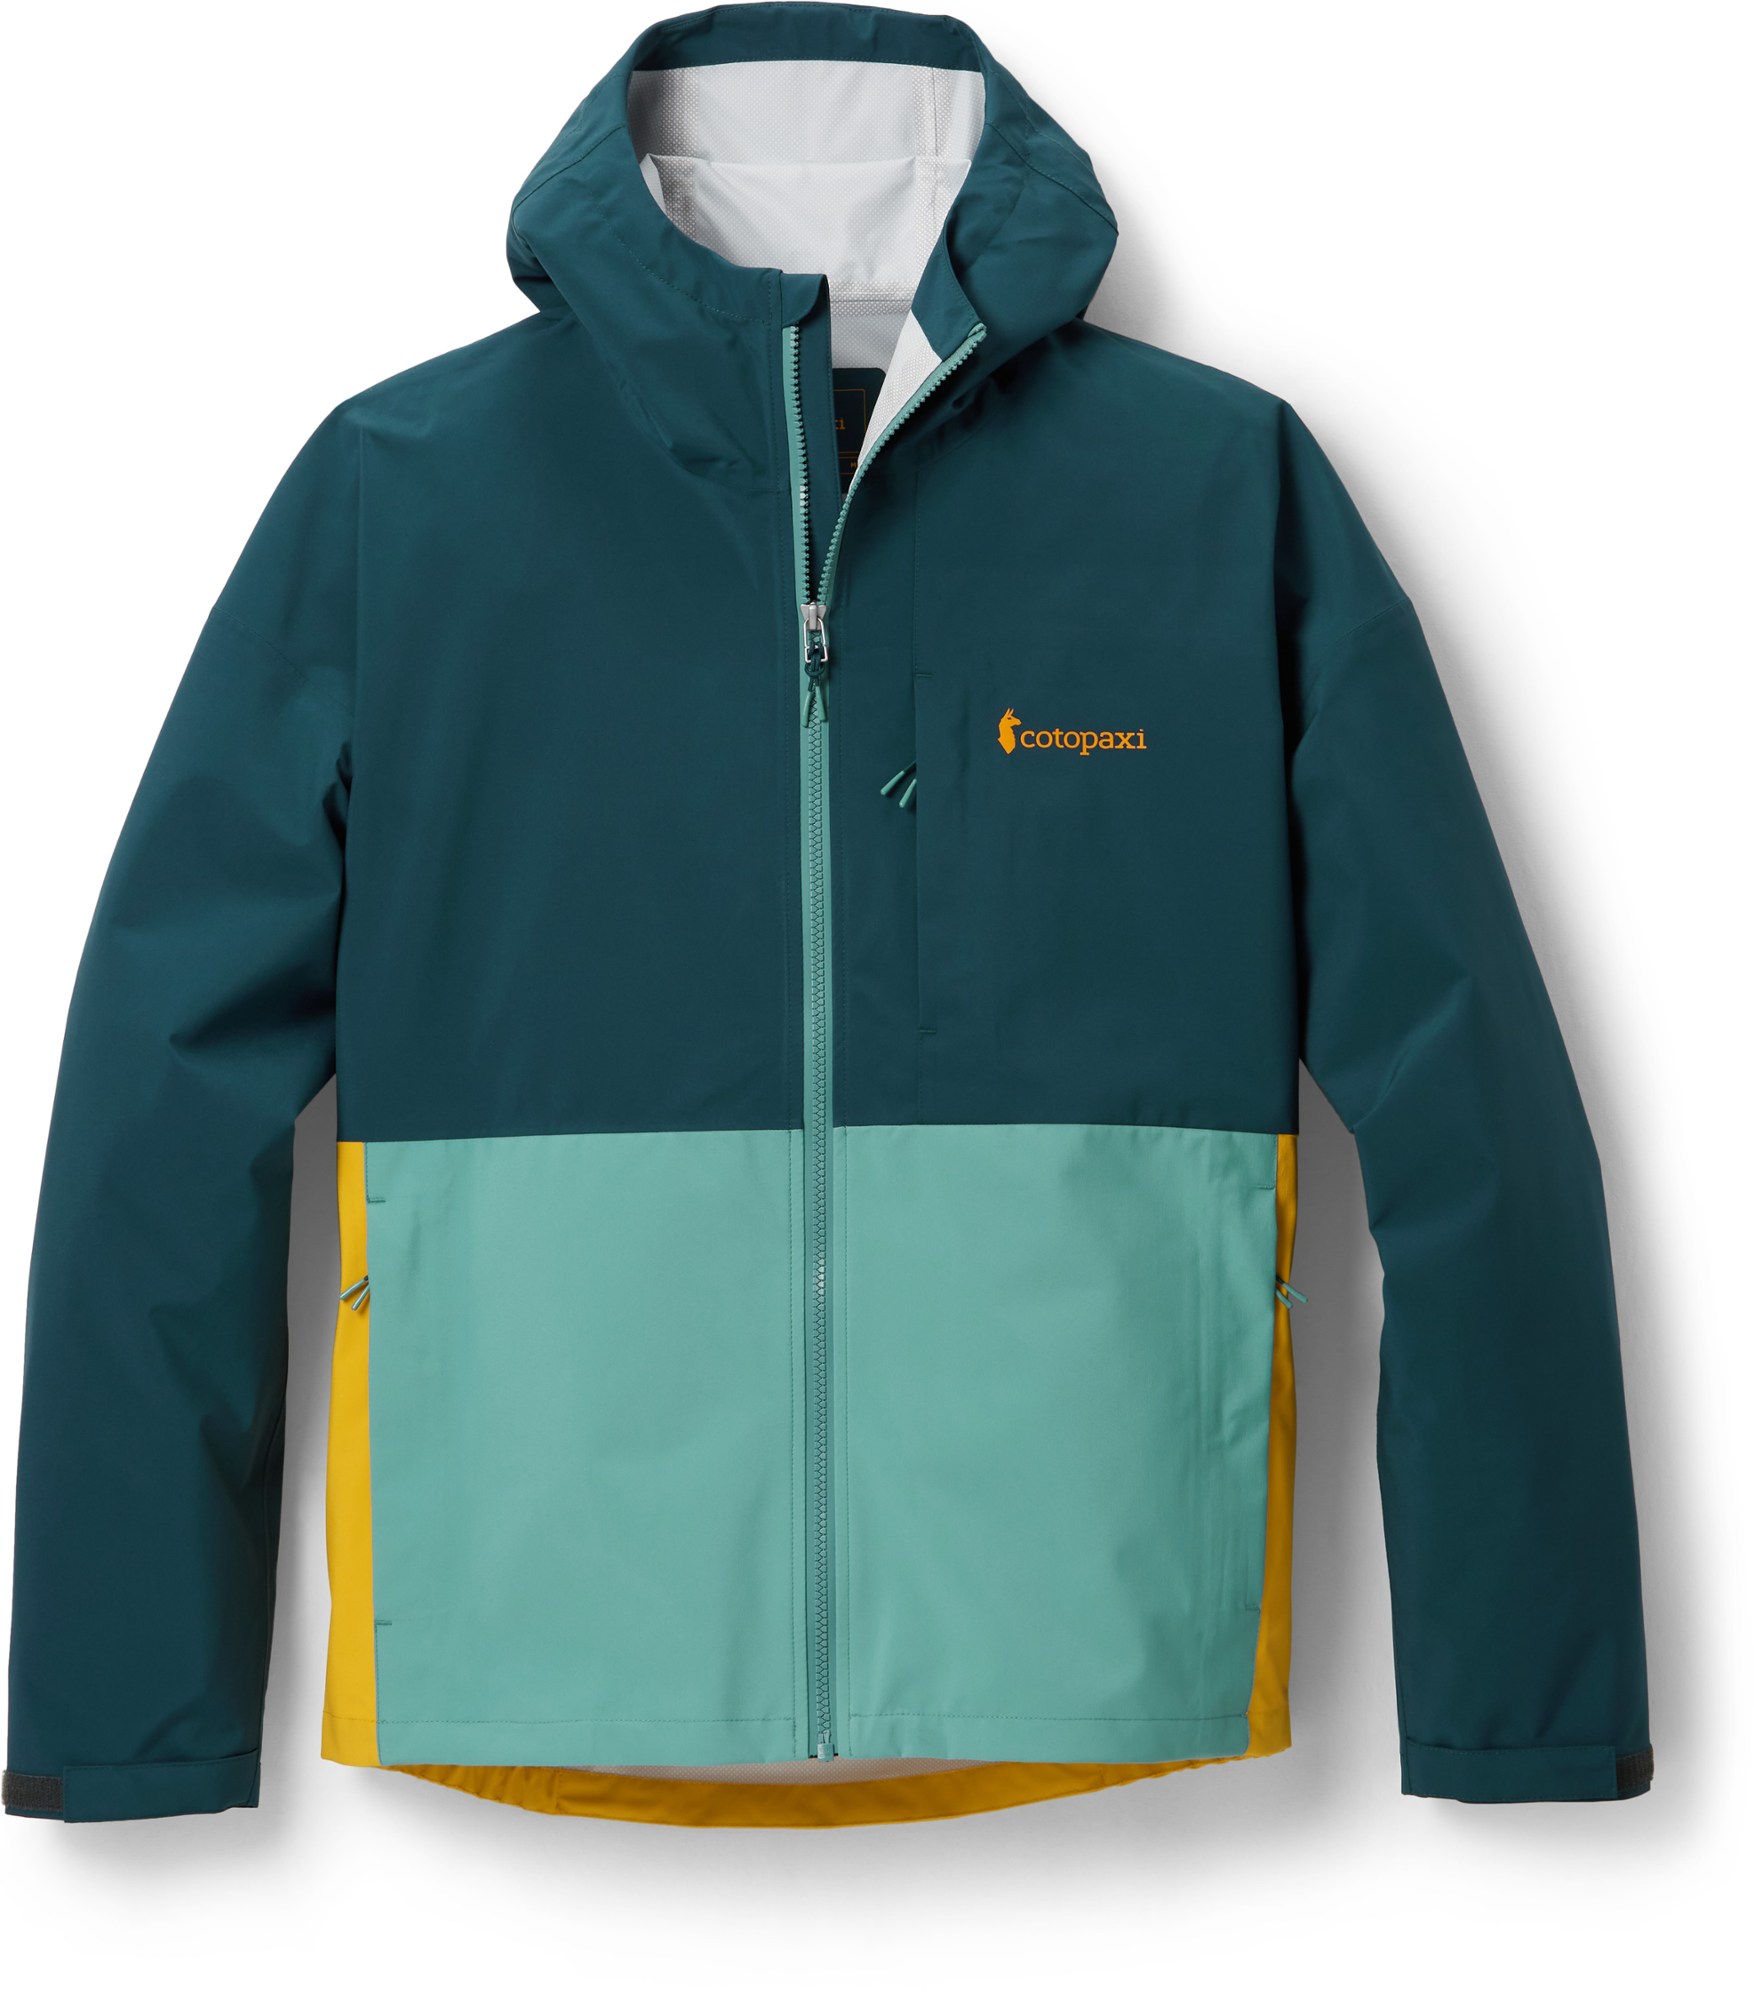 Waterproof Rain Suit: Size XL shell Jacket & Bib Pants Size XL